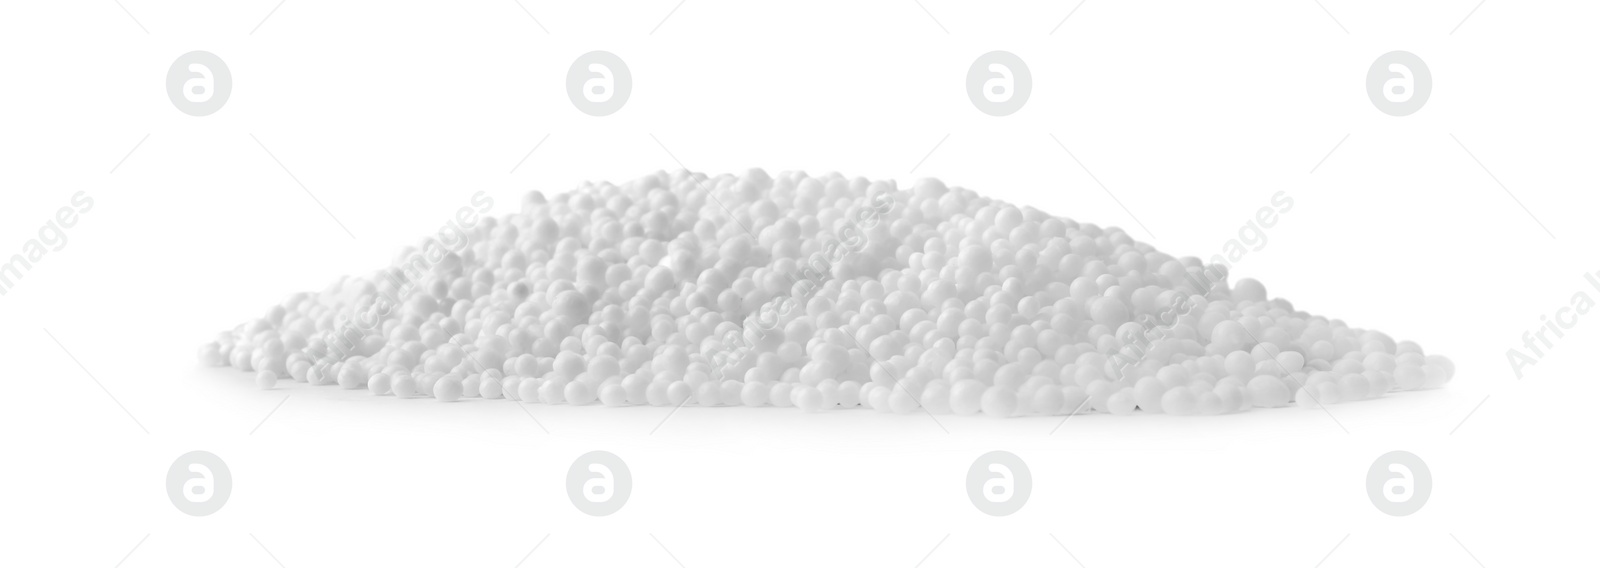 Photo of Pellets of ammonium nitrate on light grey background. Mineral fertilizer